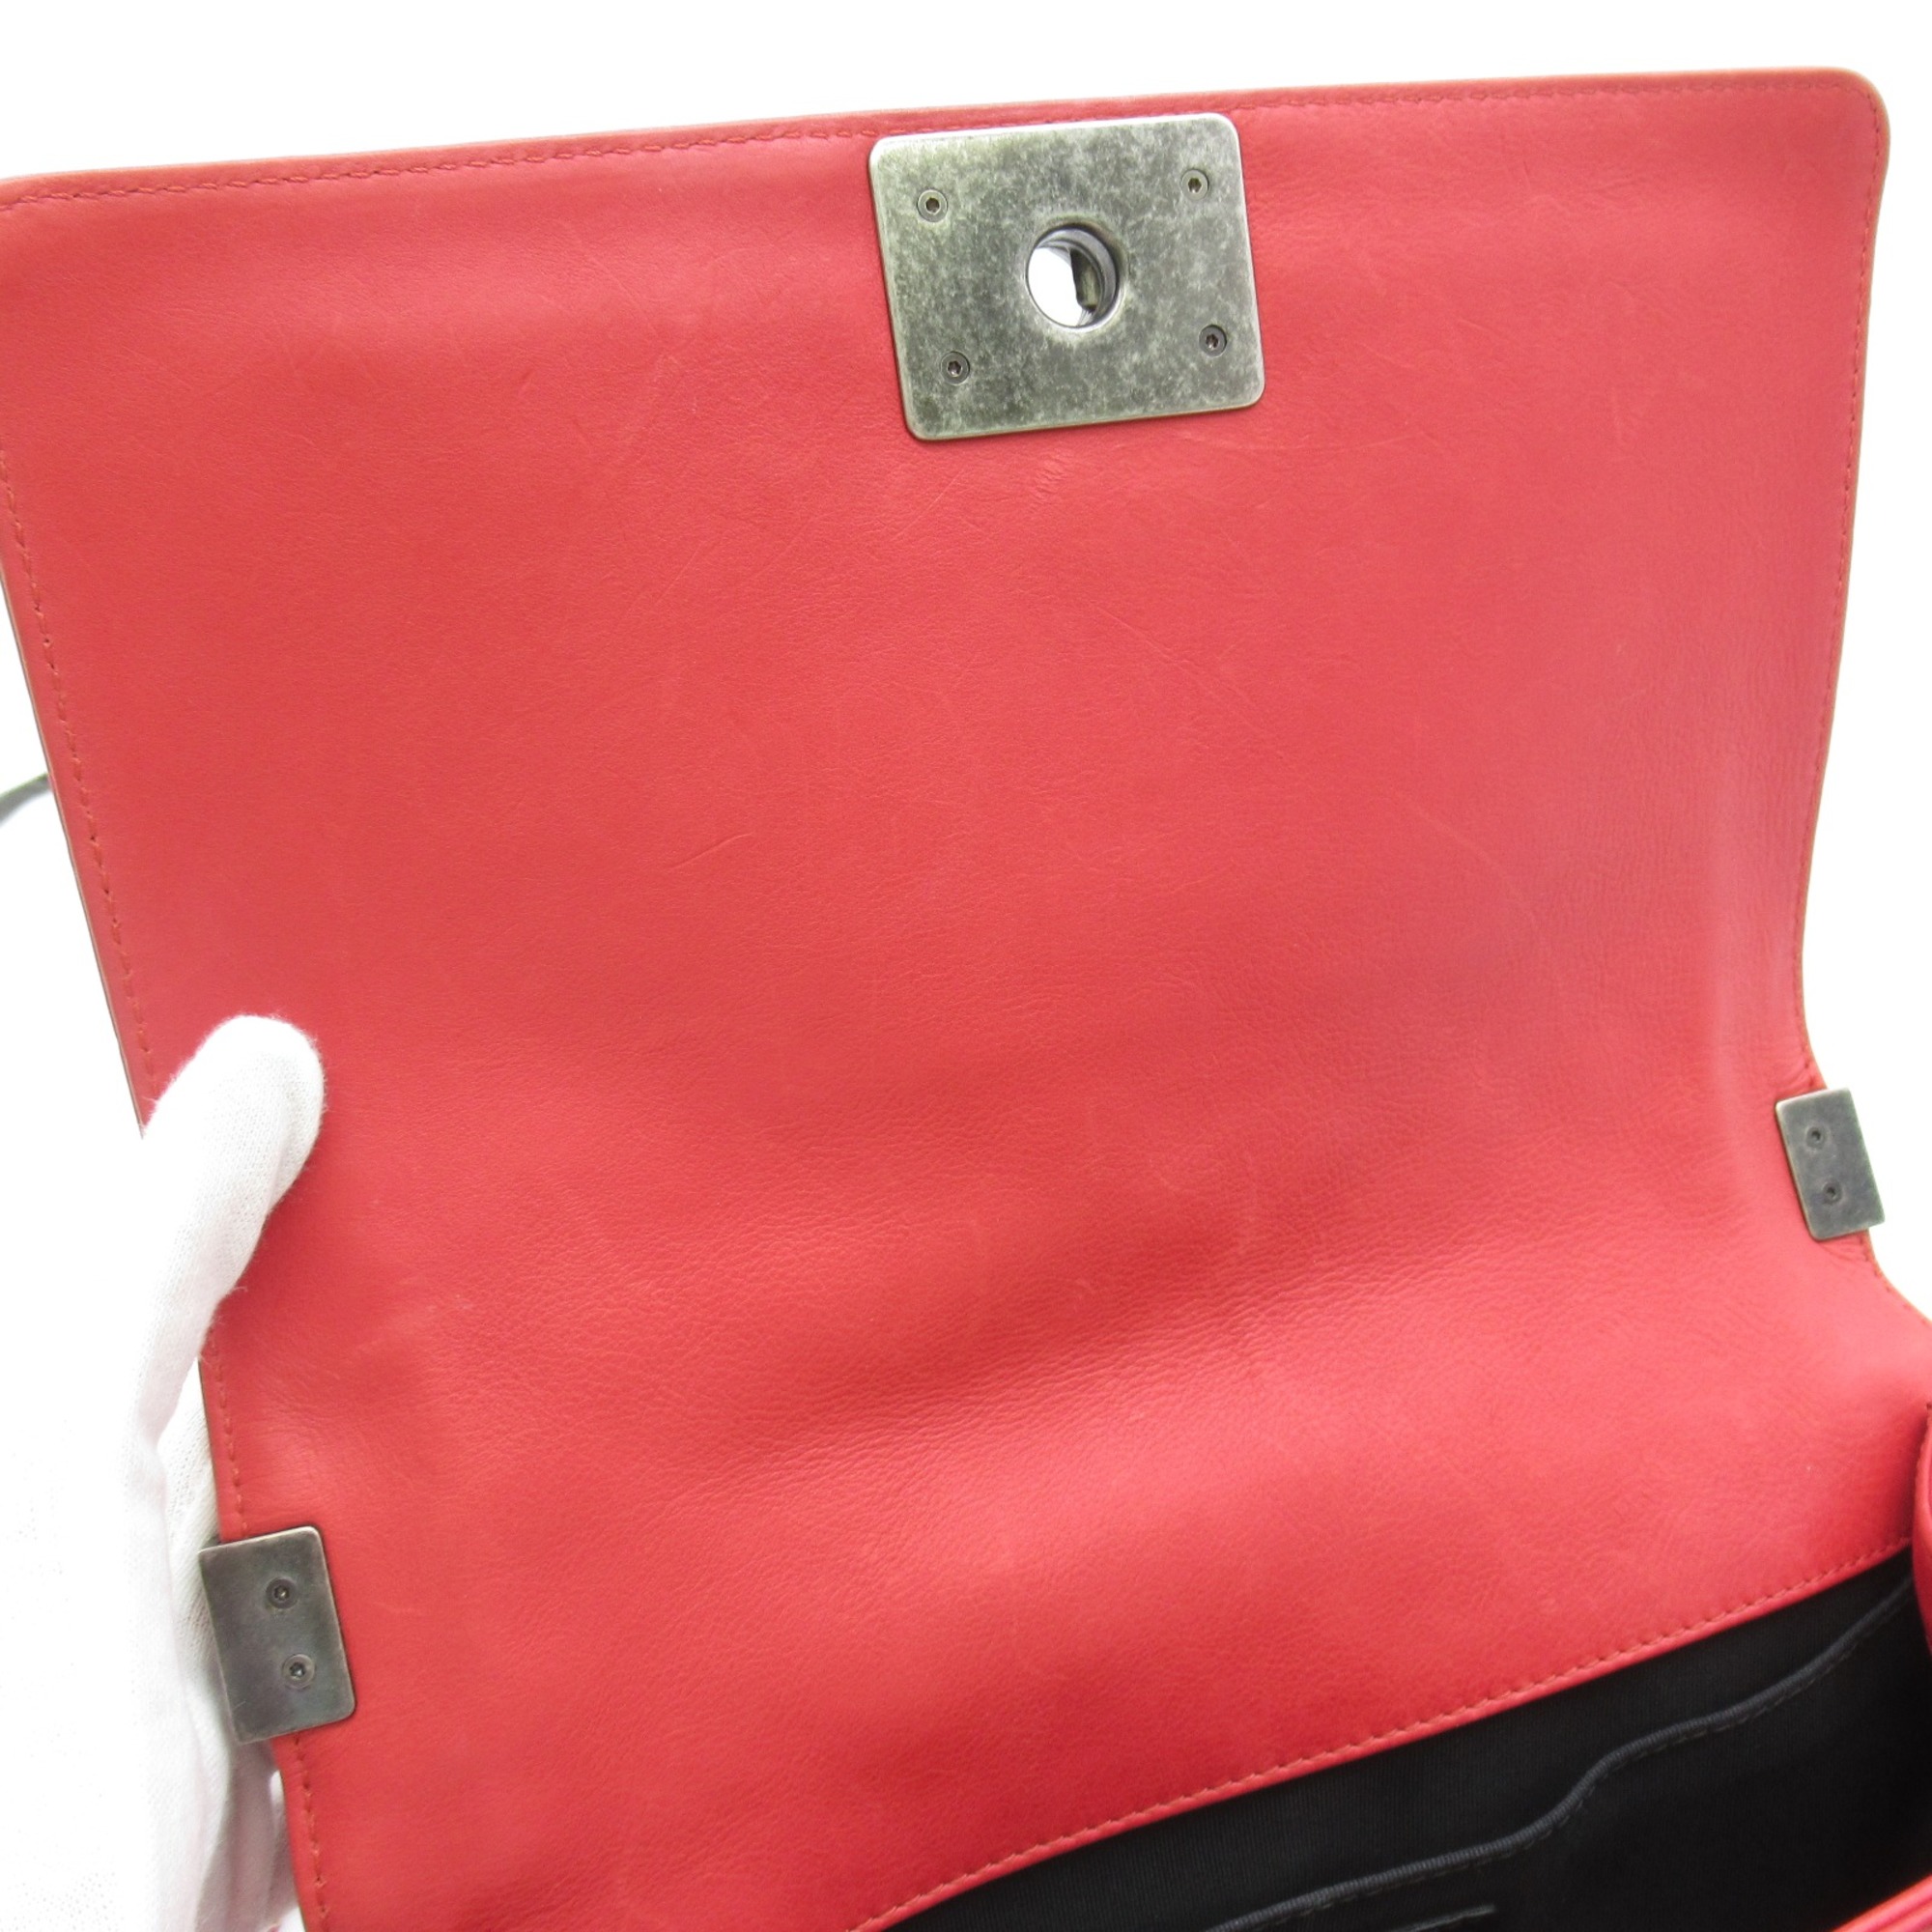 CHANEL BOY CHANEL ChainShoulder Bag Red leather